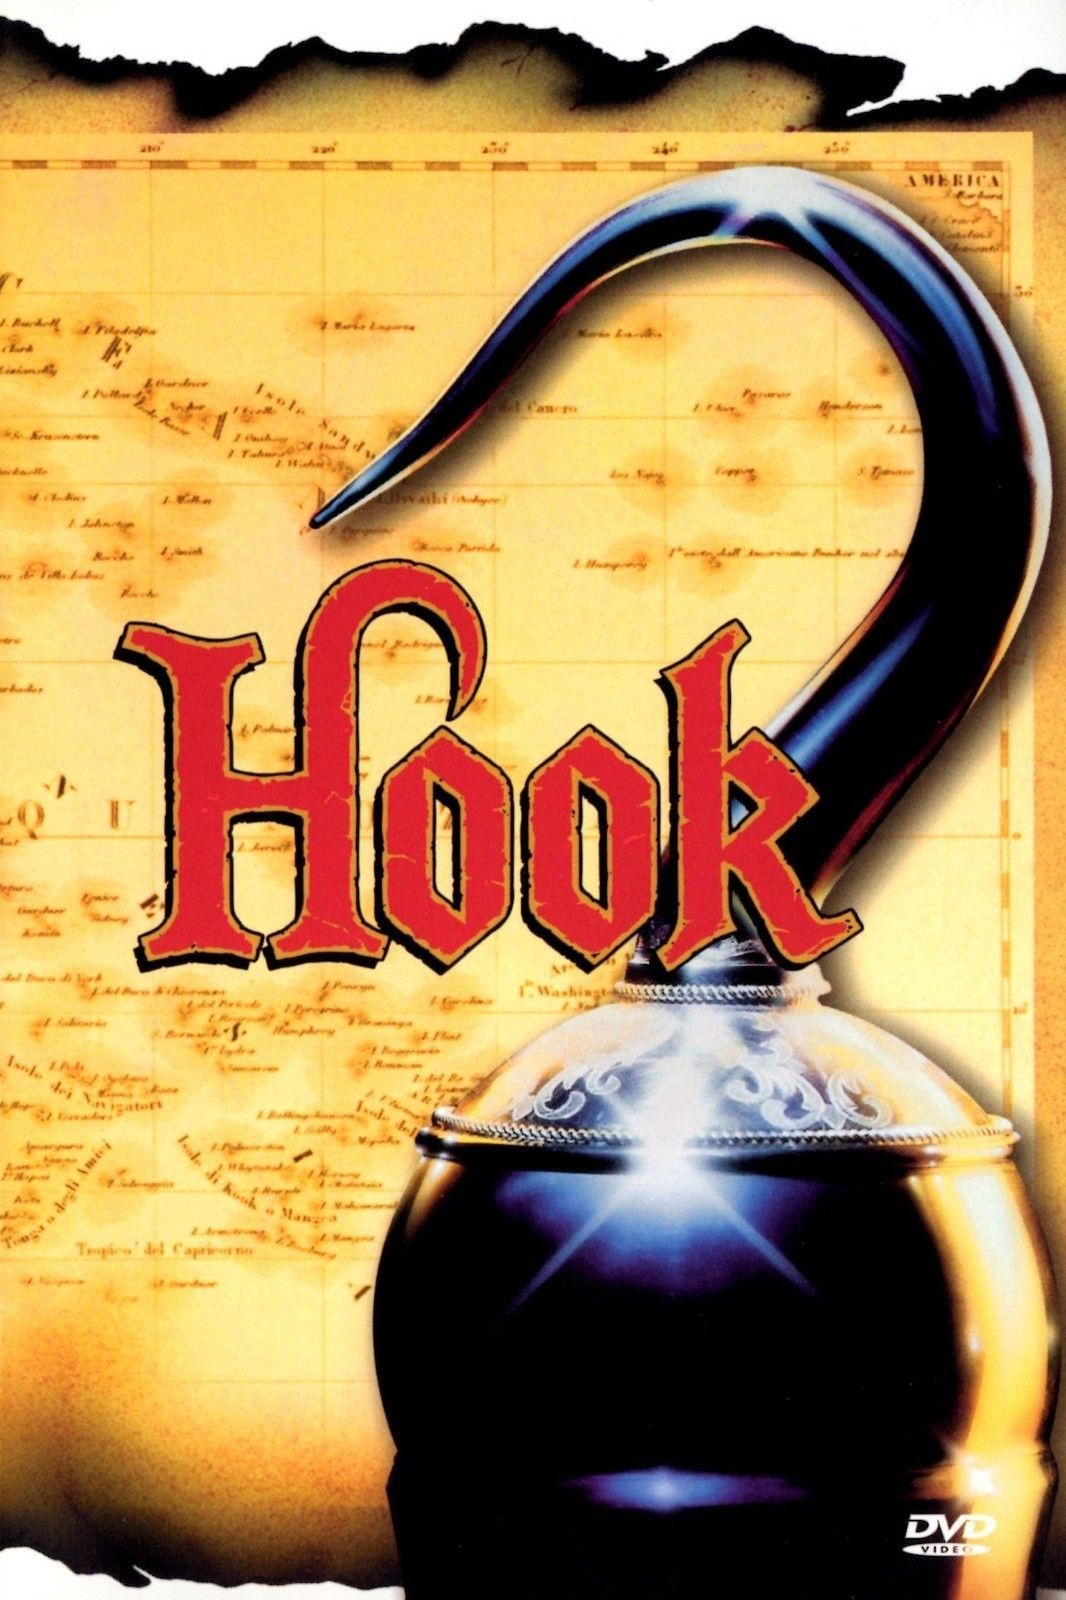 Hook: Robin Williams, Dustin Hoffman [DVD]